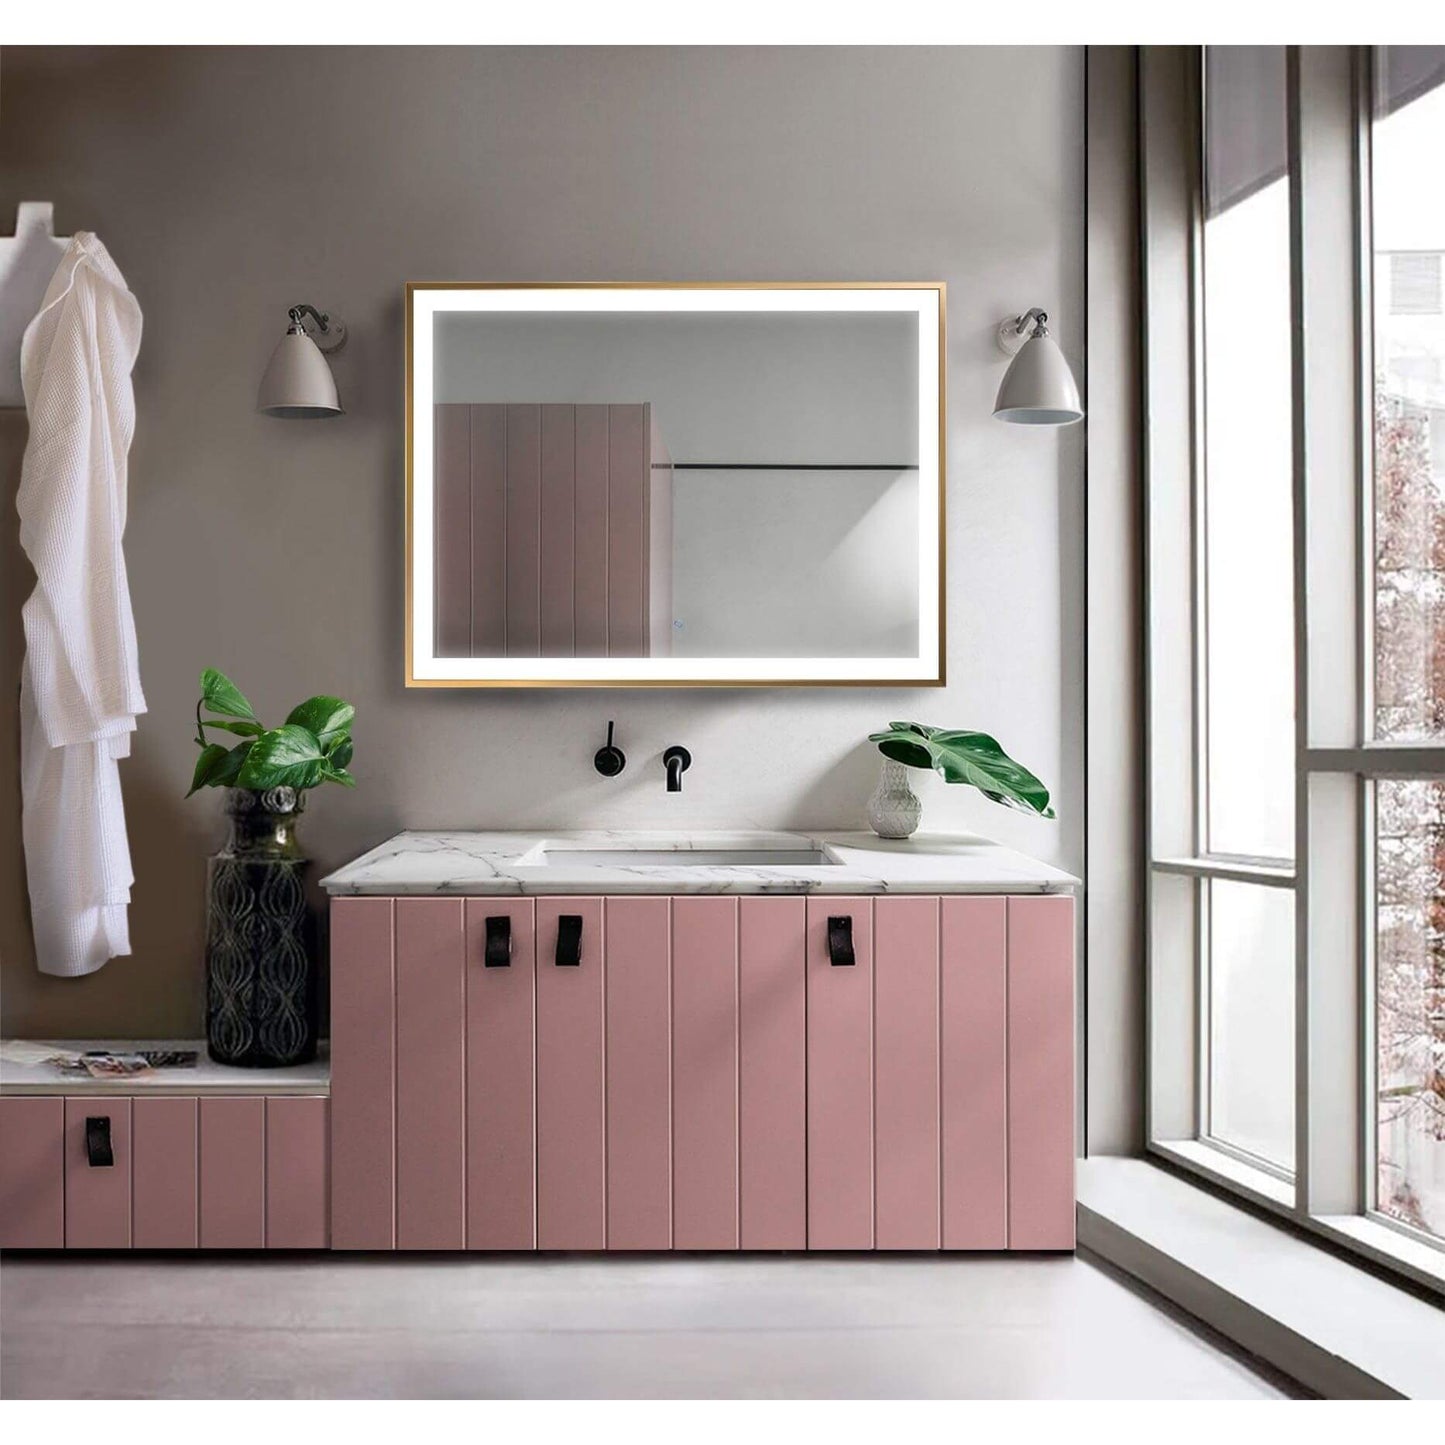 Krugg Soho 48" x 36" LED Bathroom Mirror - Matte Black/Gold Lighted Bathroom Mirror, LED Bathroom Mirror, LED Mirror, Lighted Mirror Krugg Reflections USA 